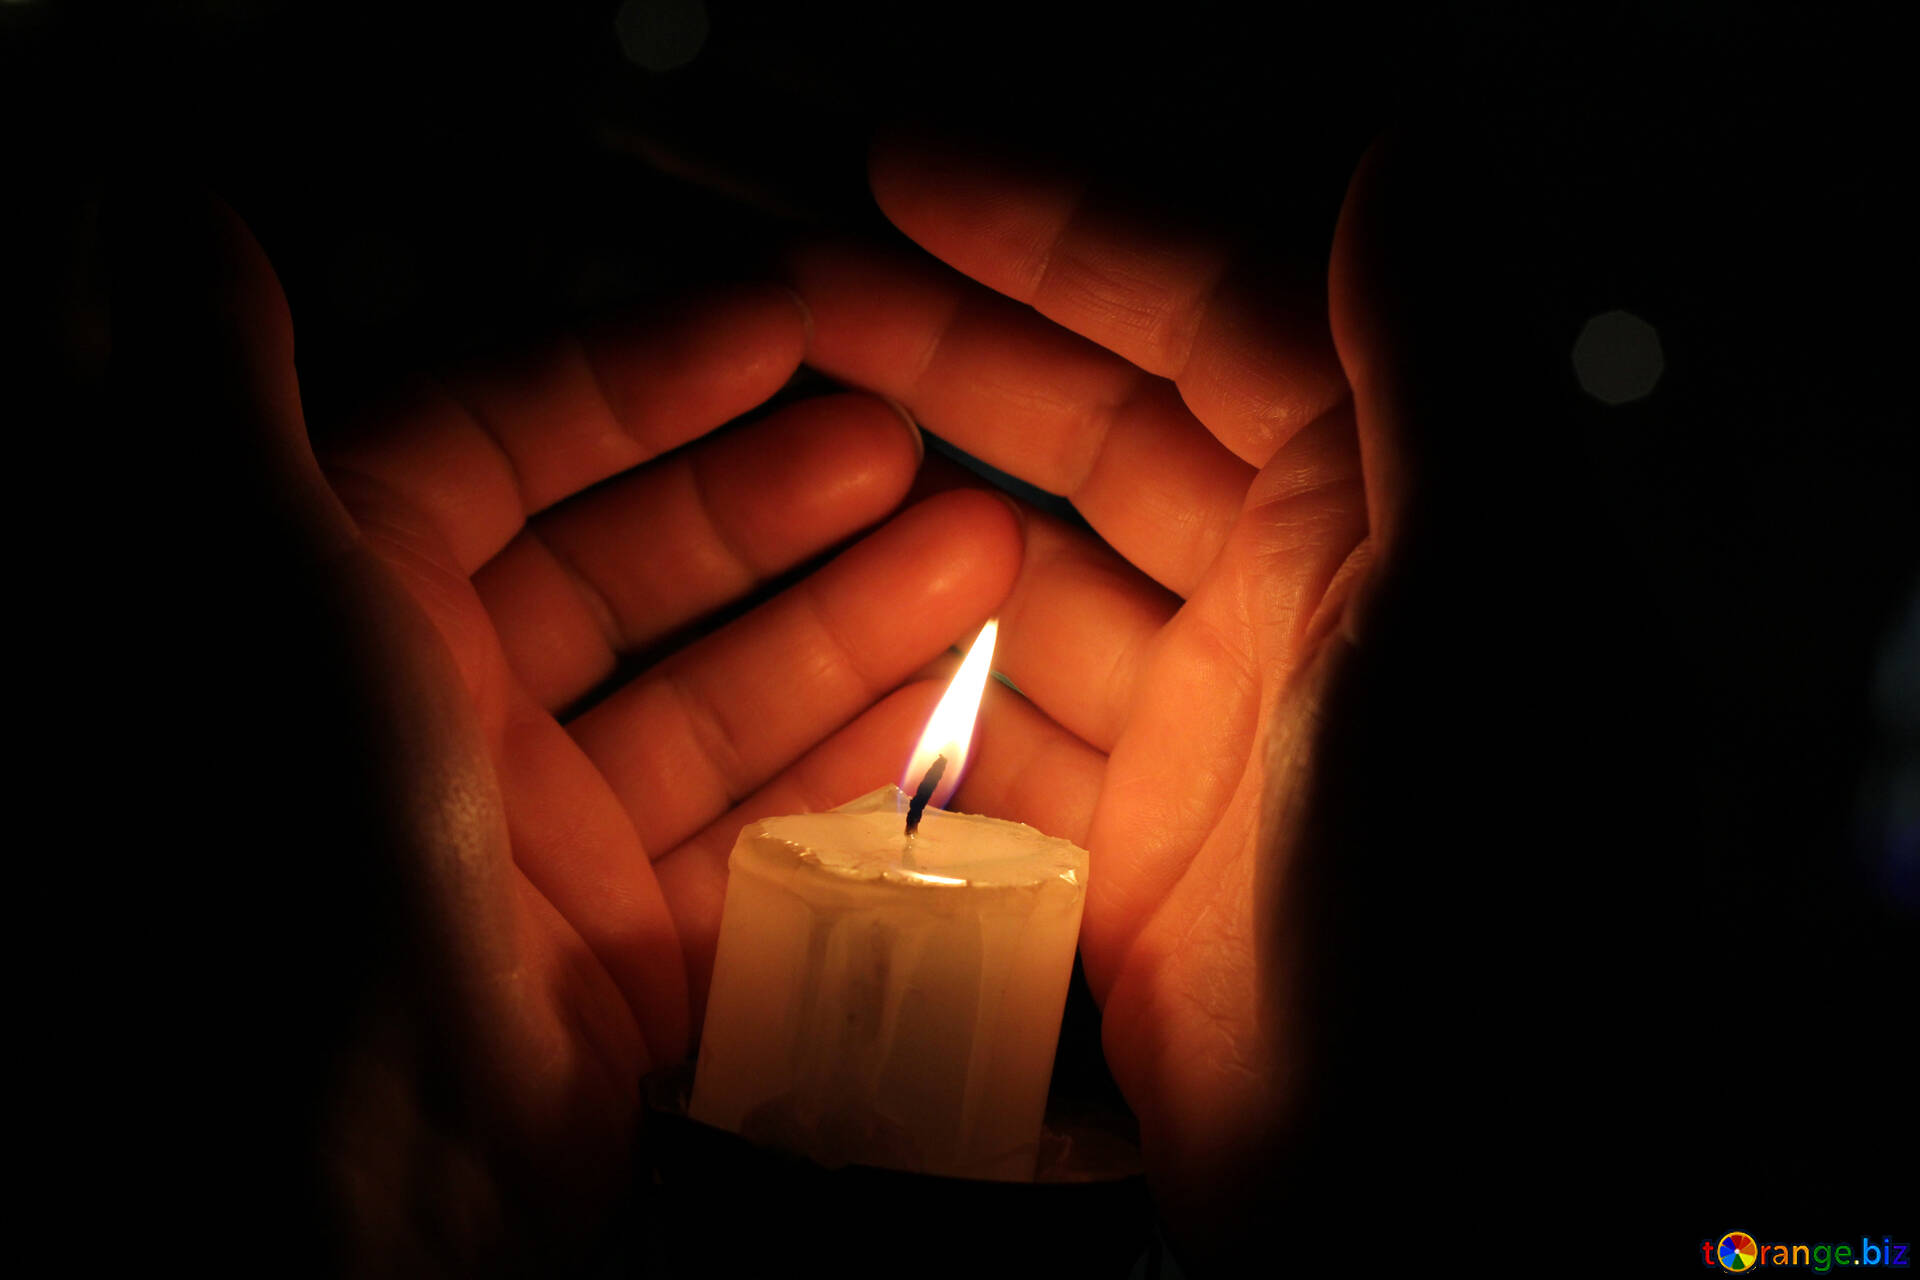 Скорбим фото со свечой 22.03. Свеча памяти. Свеча скорби. Зажженная свеча. Траурная свеча.